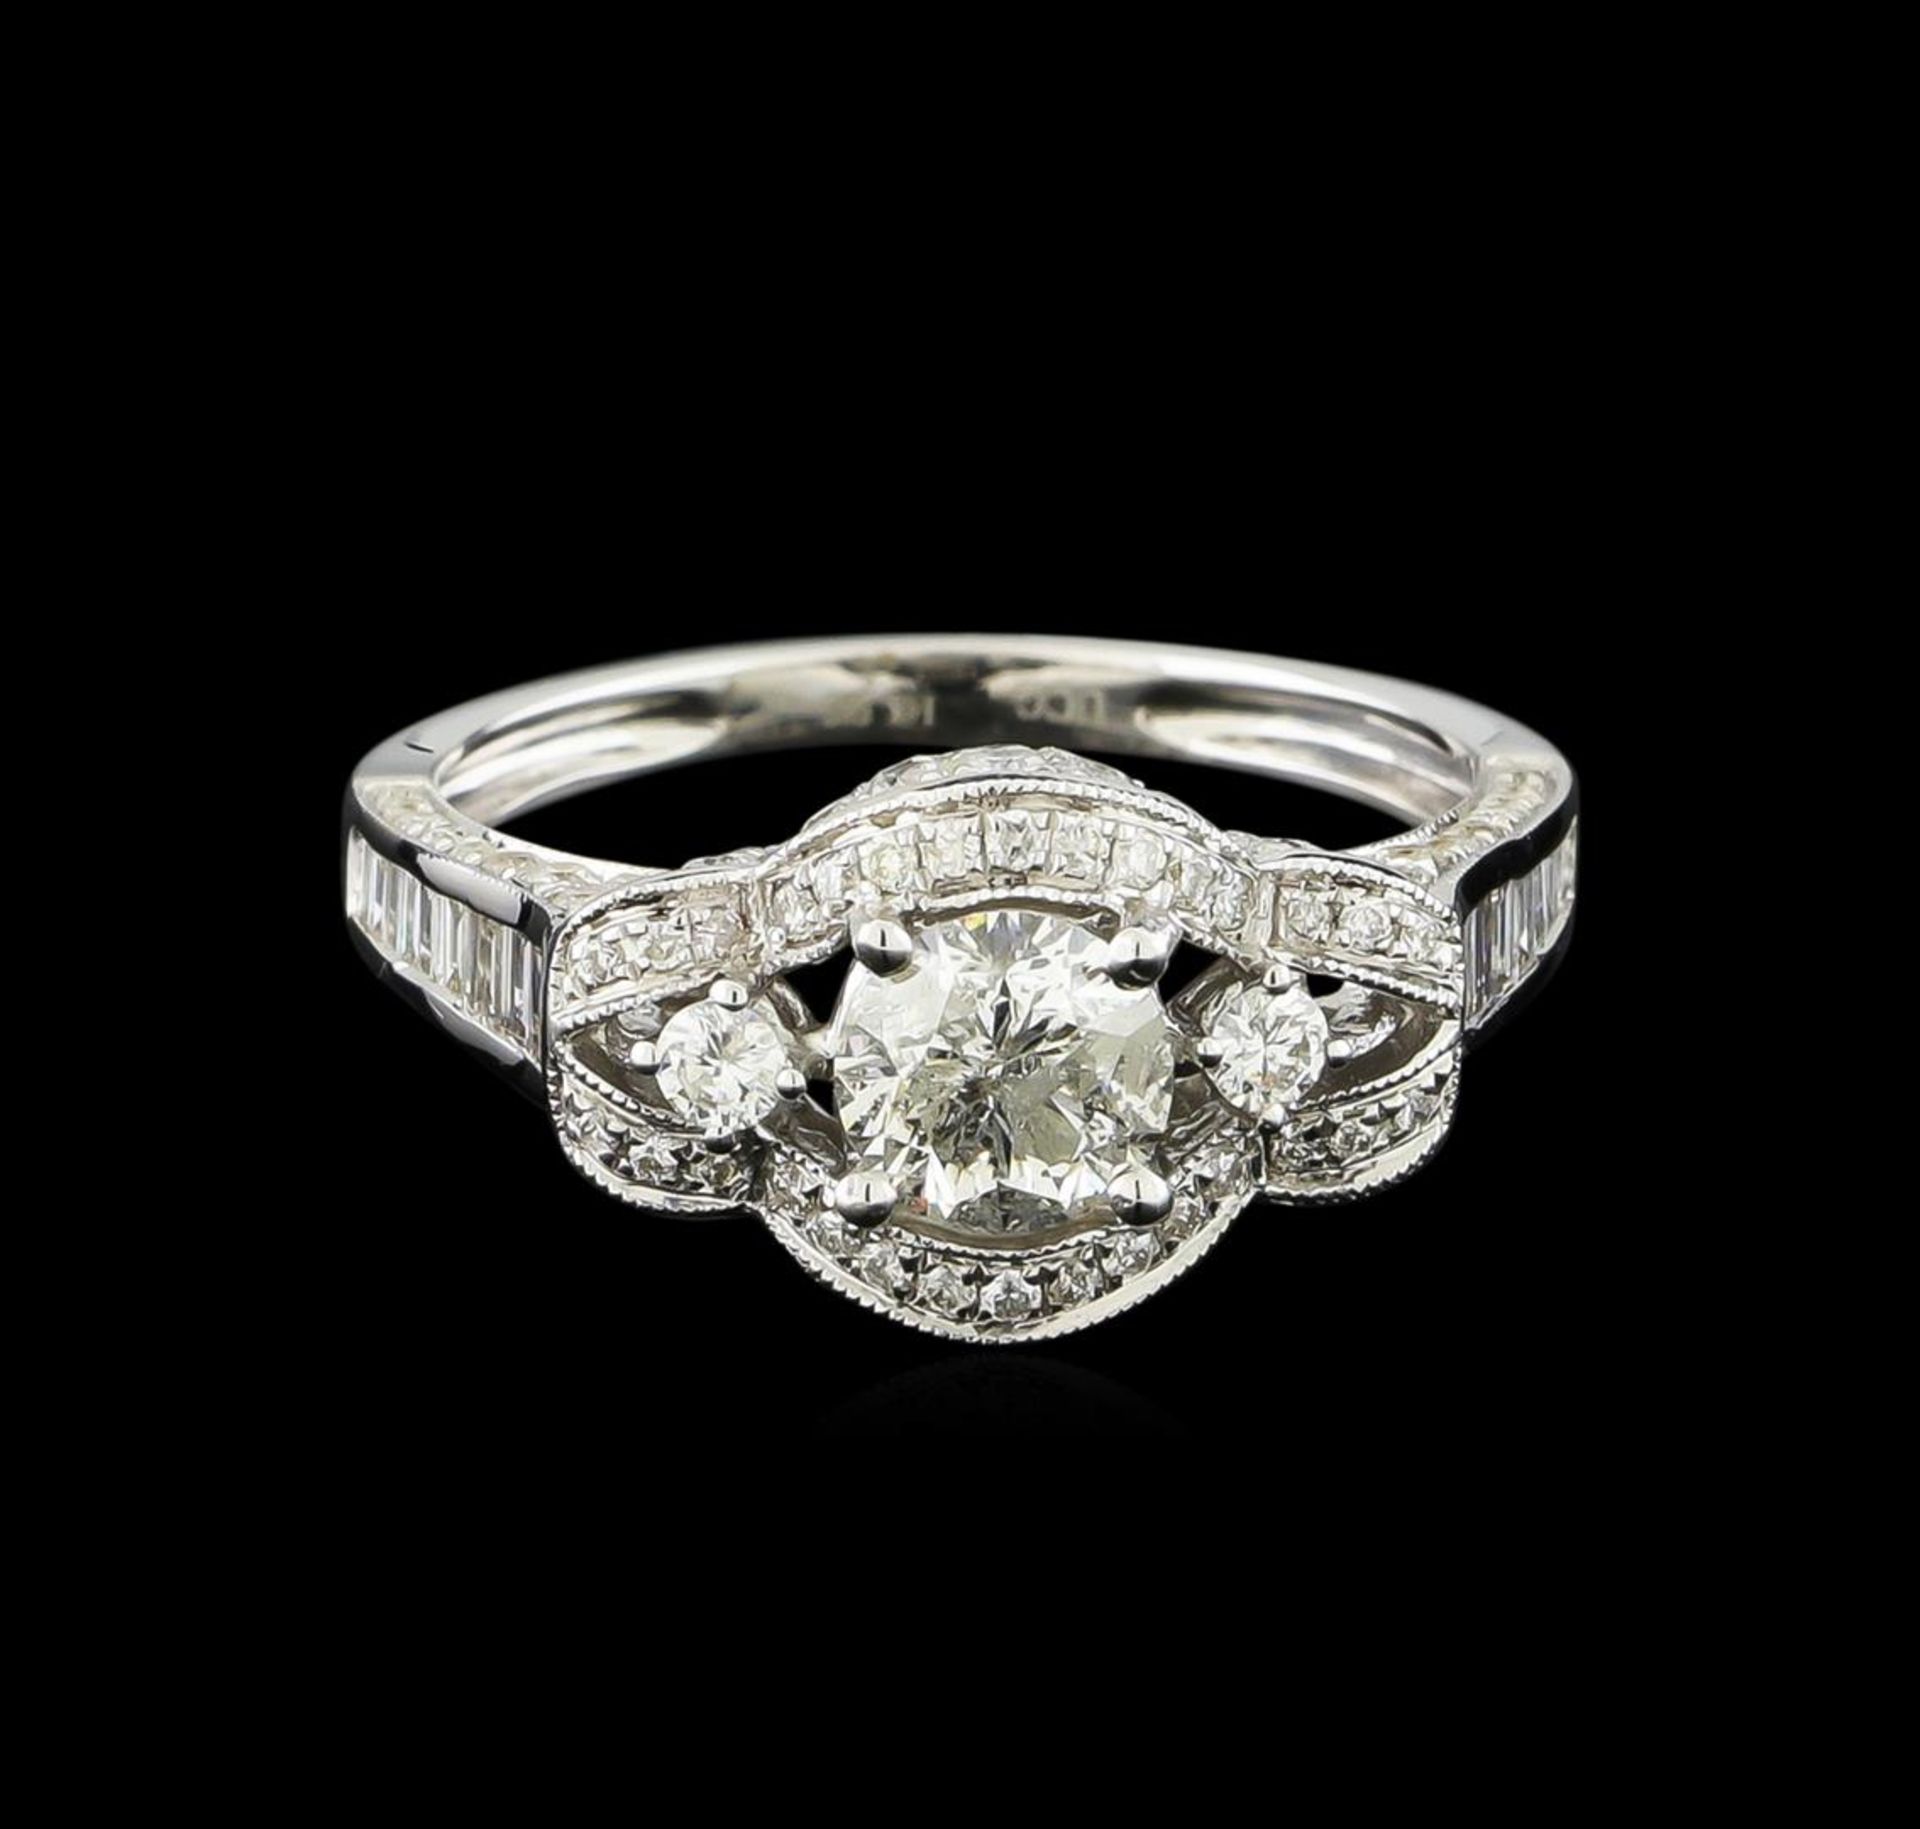 14KT White Gold 1.72 ctw Diamond Ring - Image 2 of 4